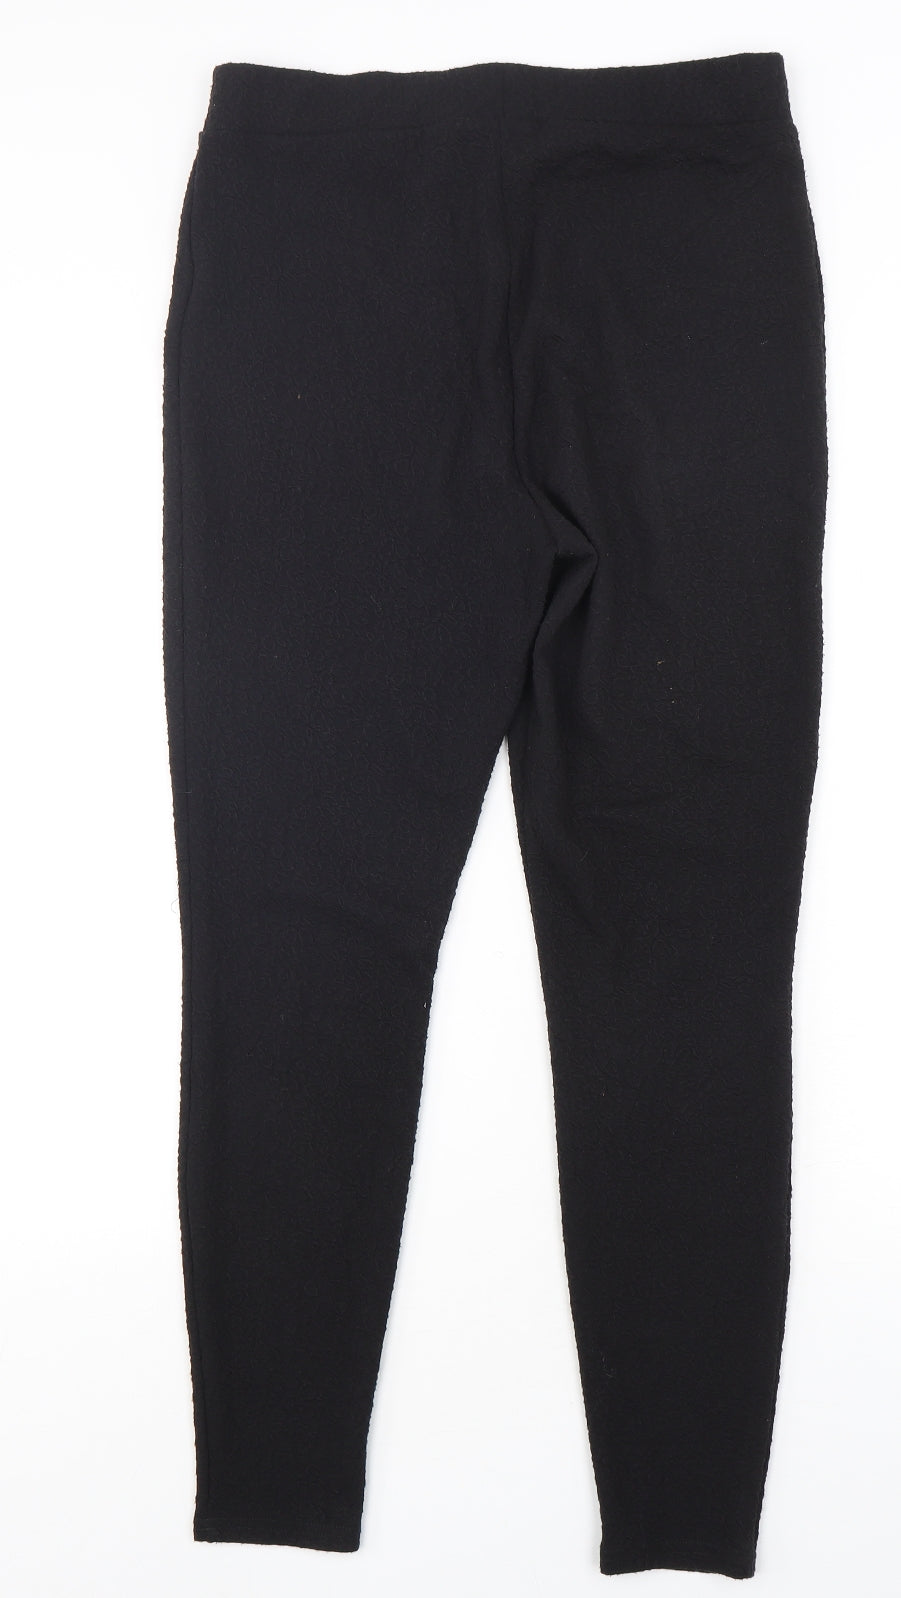 Papaya Womens Black Geometric Polyester Jogger Leggings Size 14 L27 in